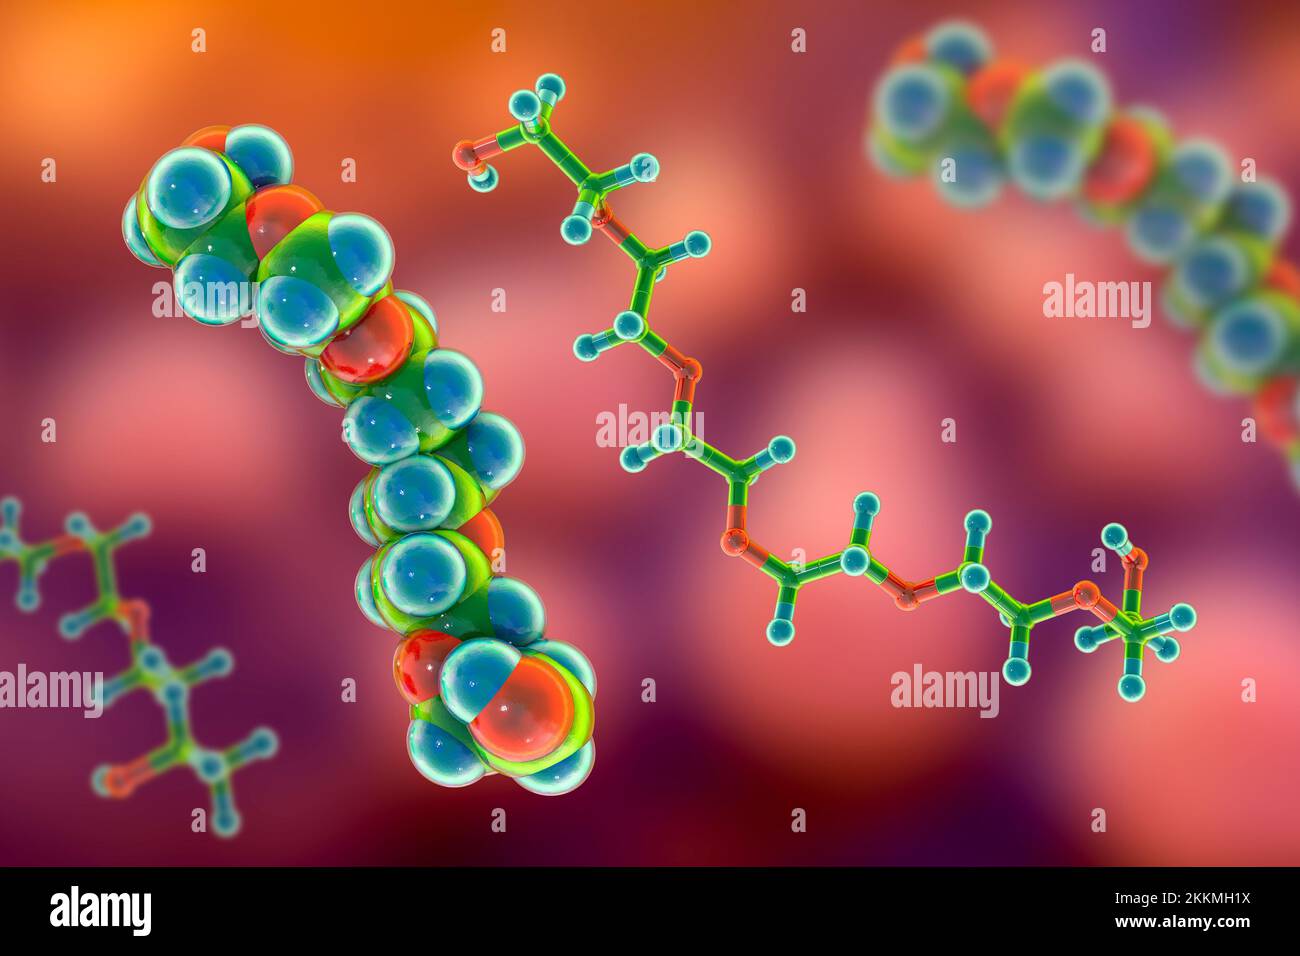 Polyethylene glycol molecule, illustration Stock Photo